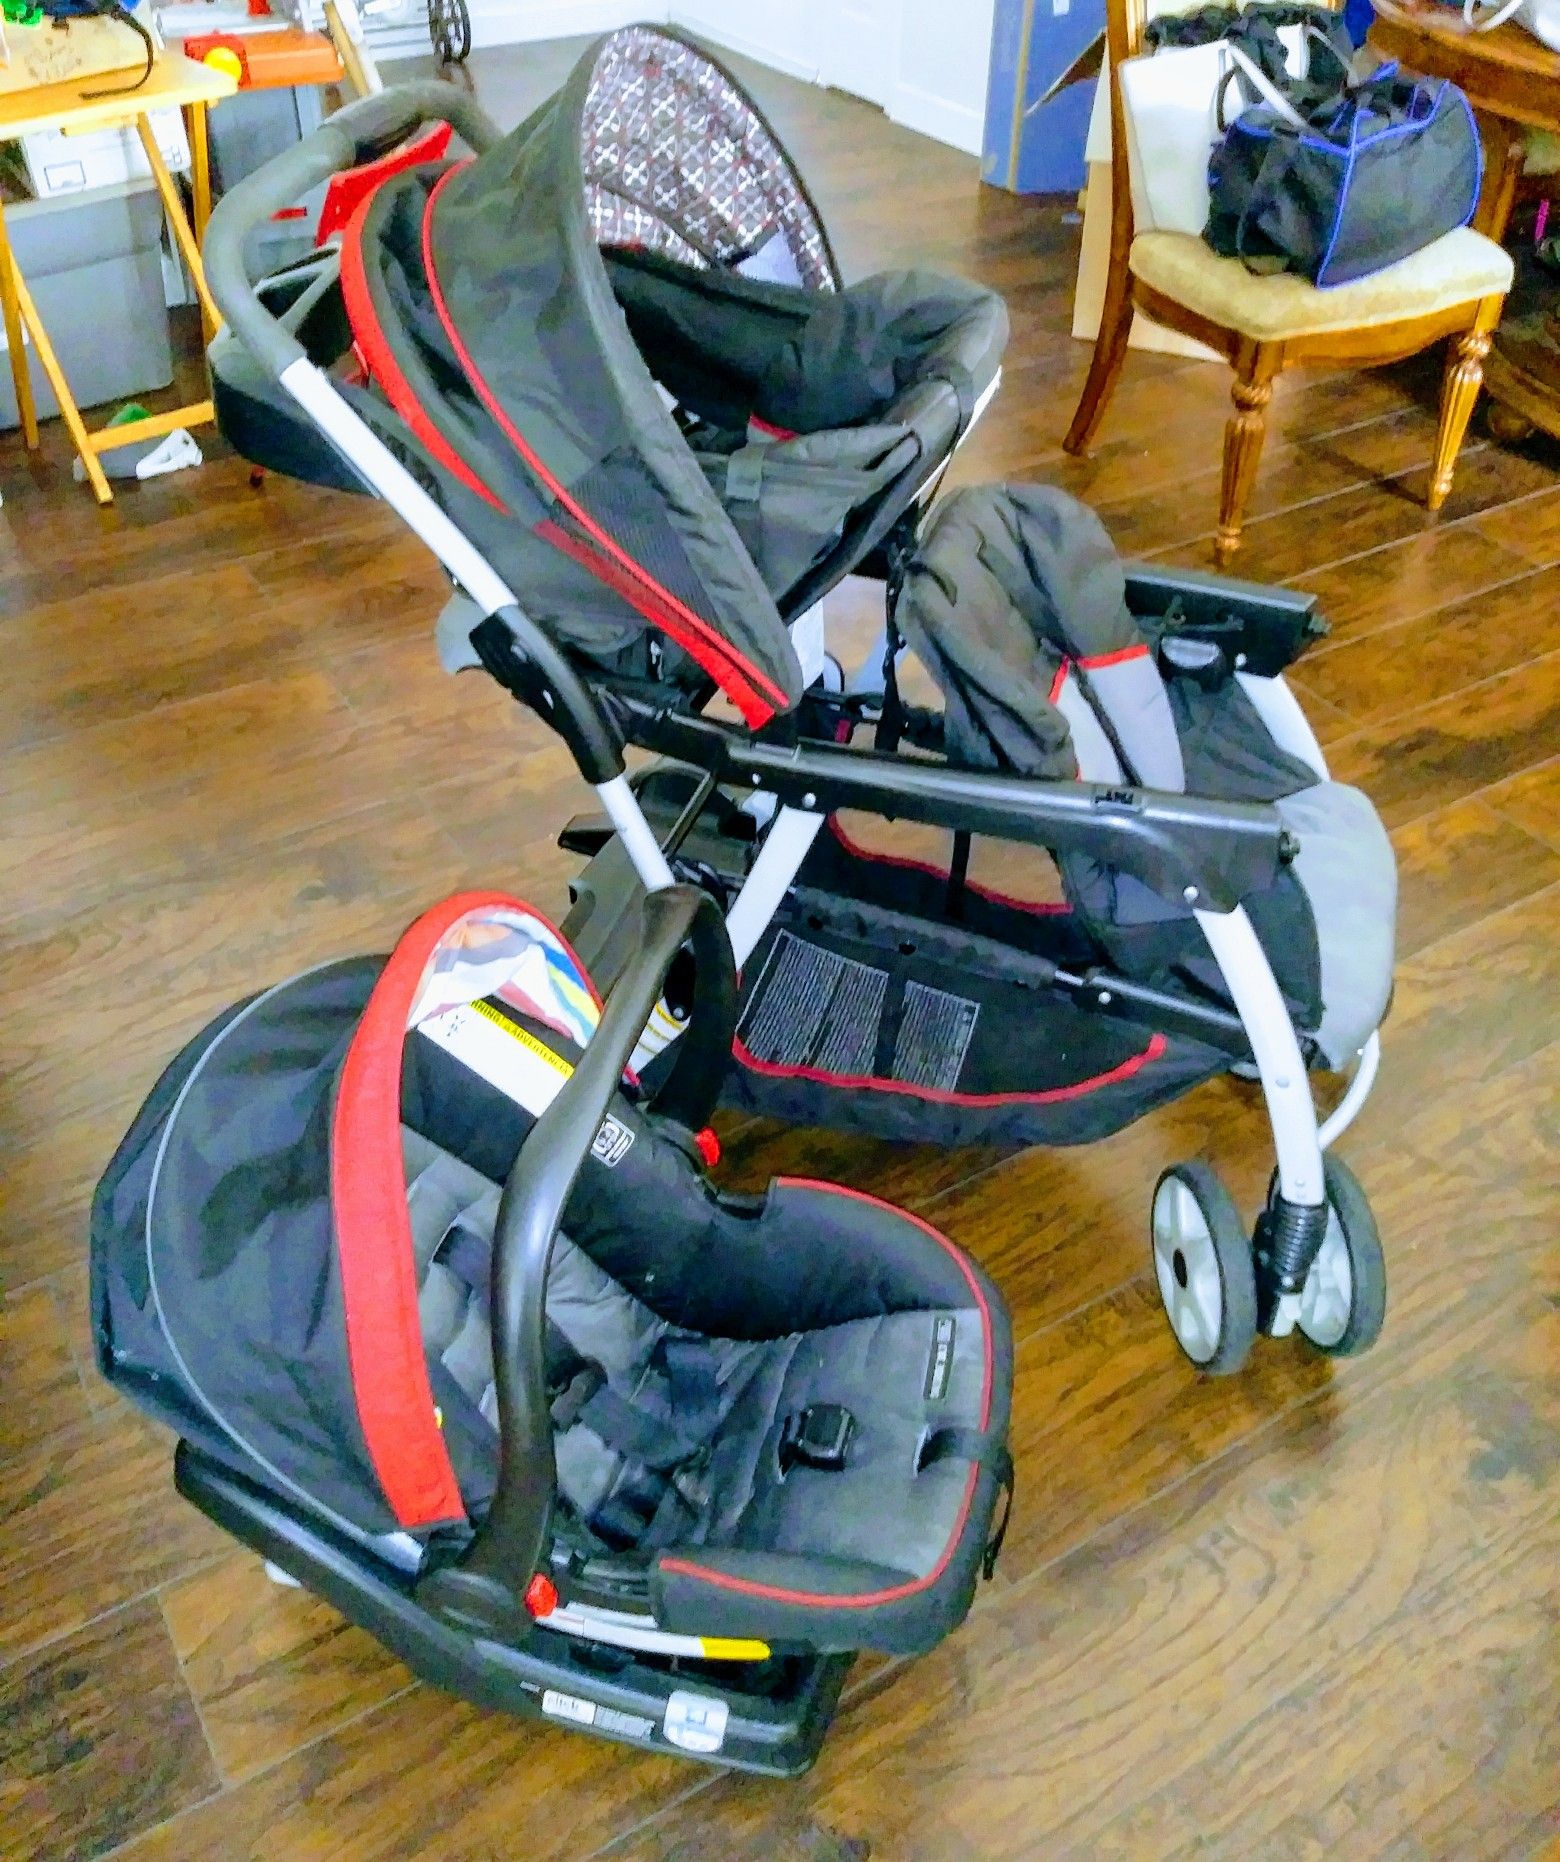 Graco stroller & Car seat